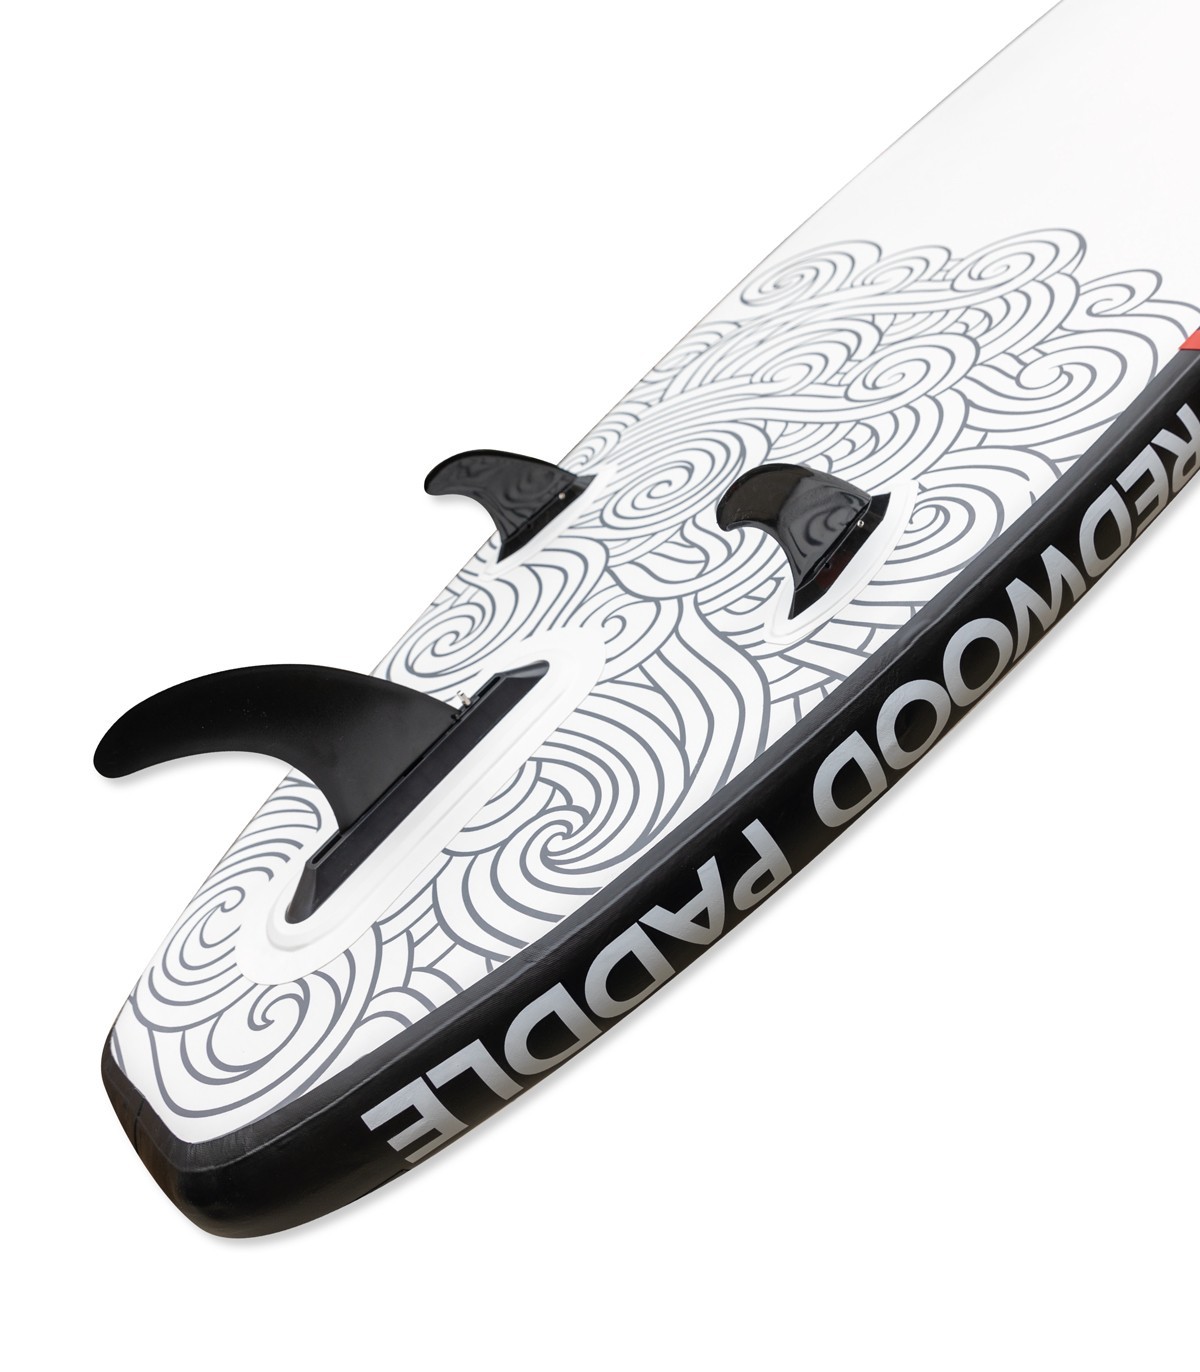 Funbox Pro 10′2 Wide - Tabla Paddle Surf